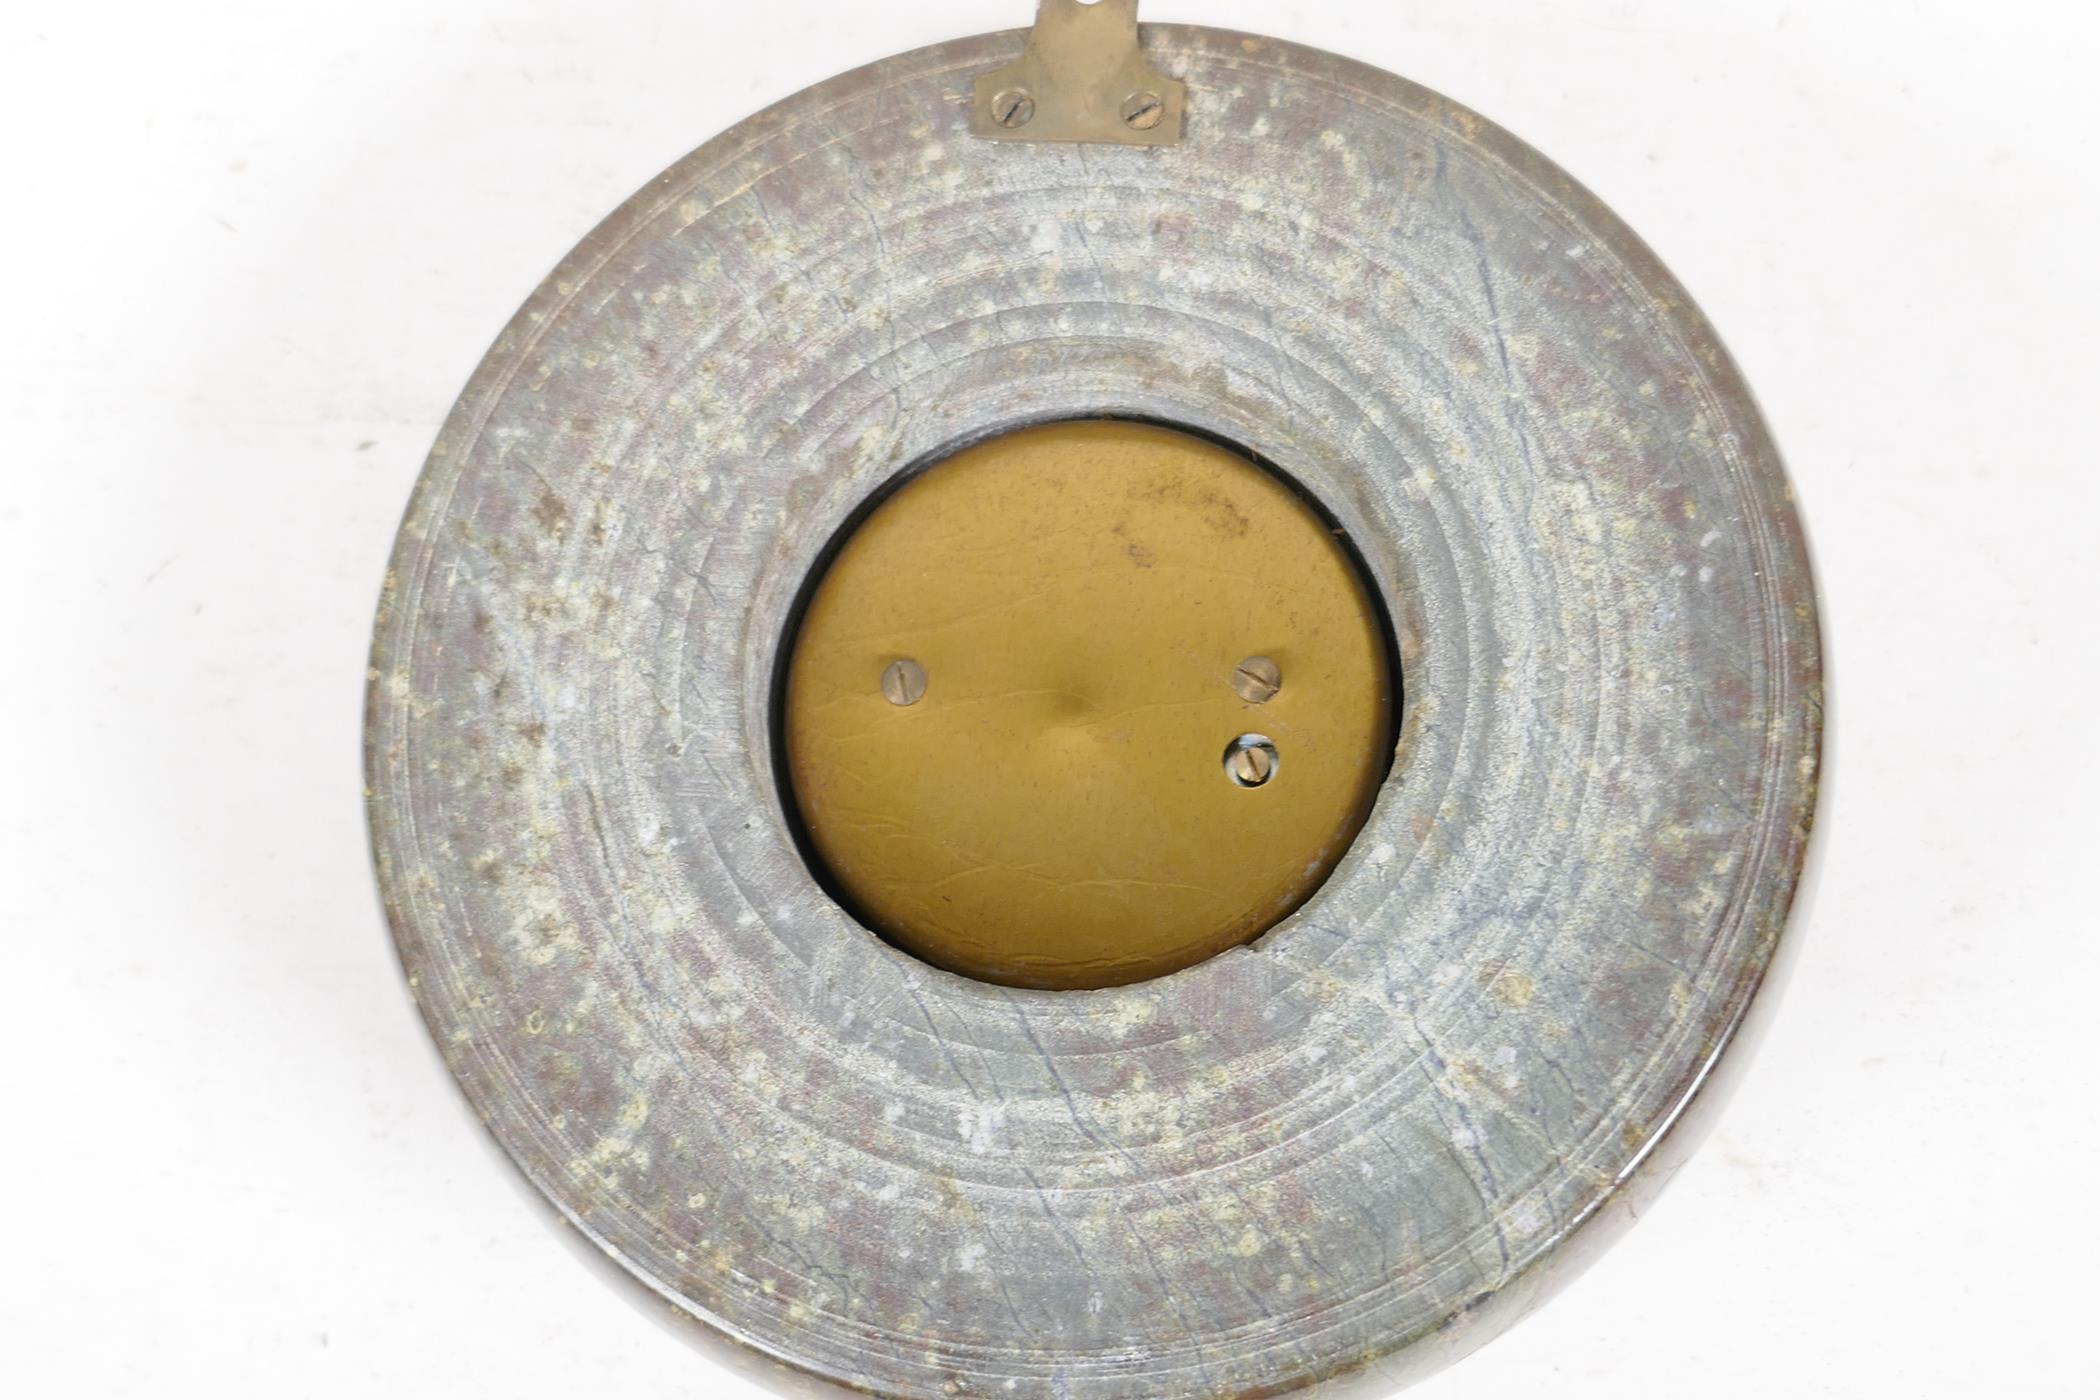 A serpentine cased aneroid barometer, 7" diameter - Image 3 of 3